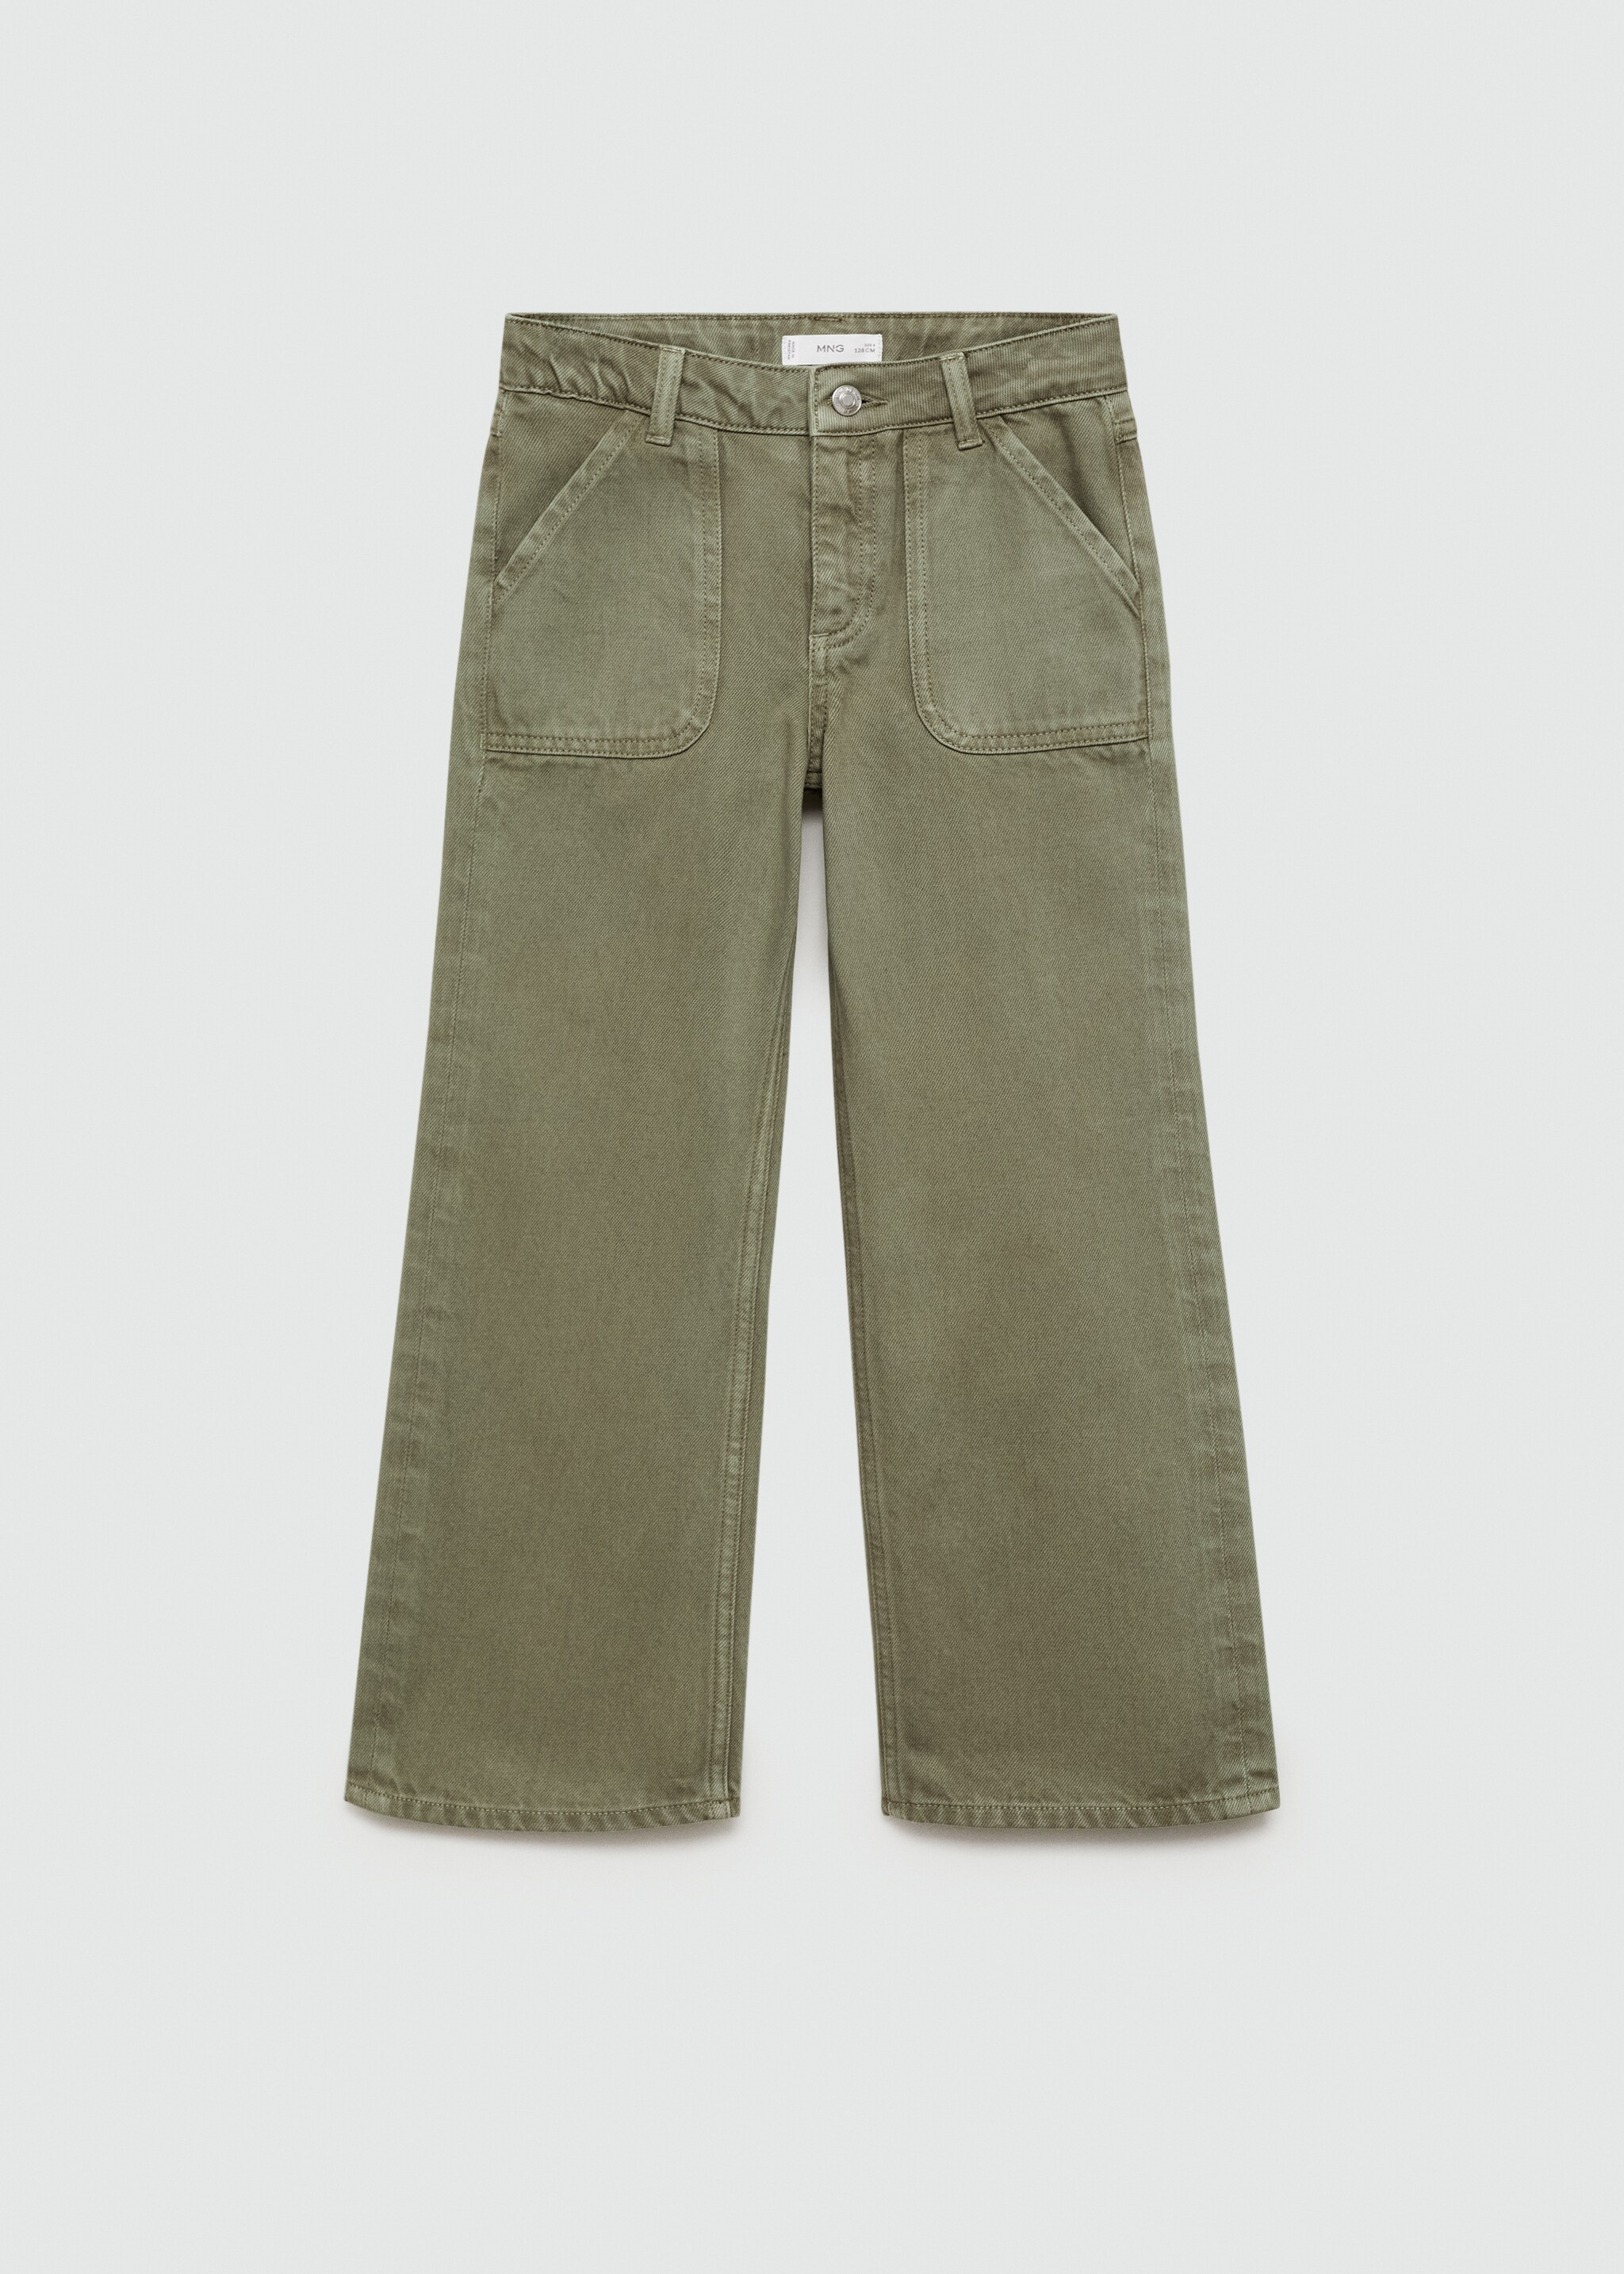 Culotte jeans with pockets - Товар без моделі